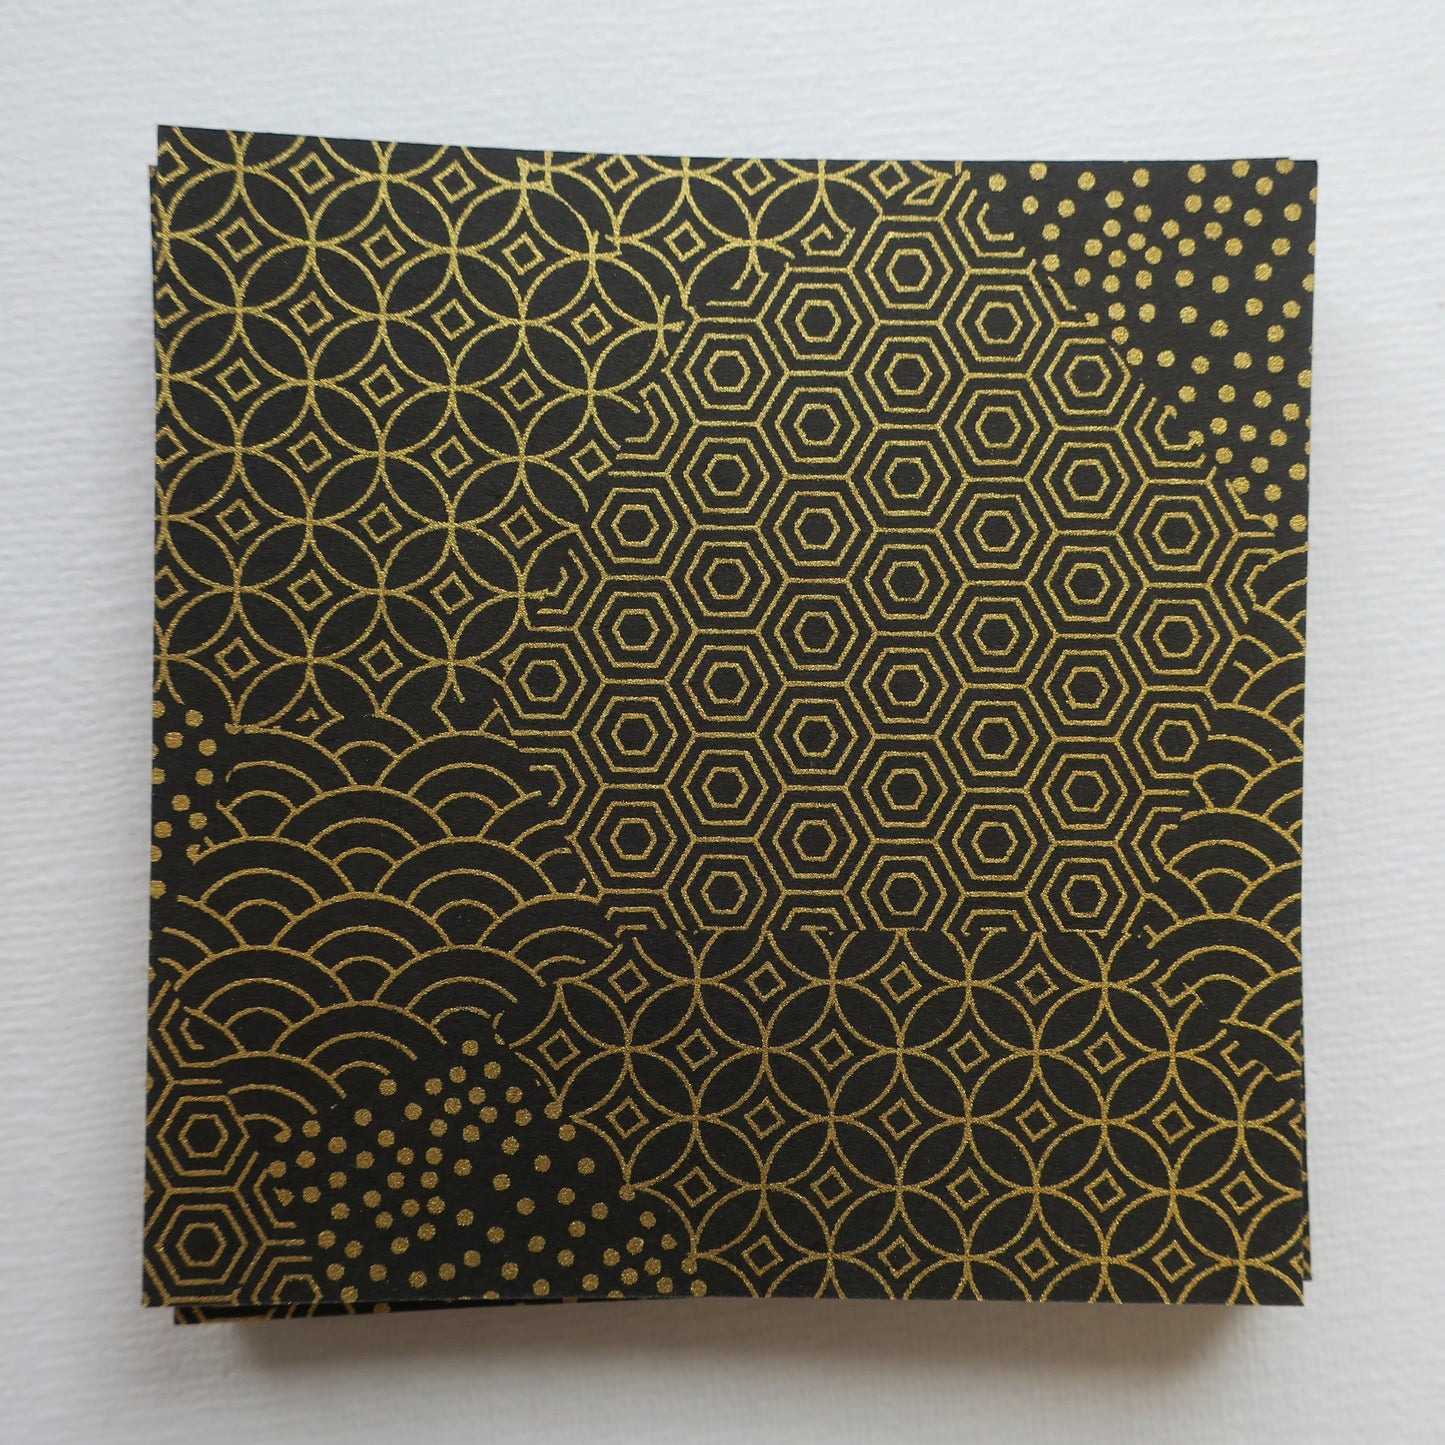 Pack of 100 Sheets 7x7cm Yuzen Washi Origami Paper HZ-496 - Black Gold Mixed Geometric Patterns